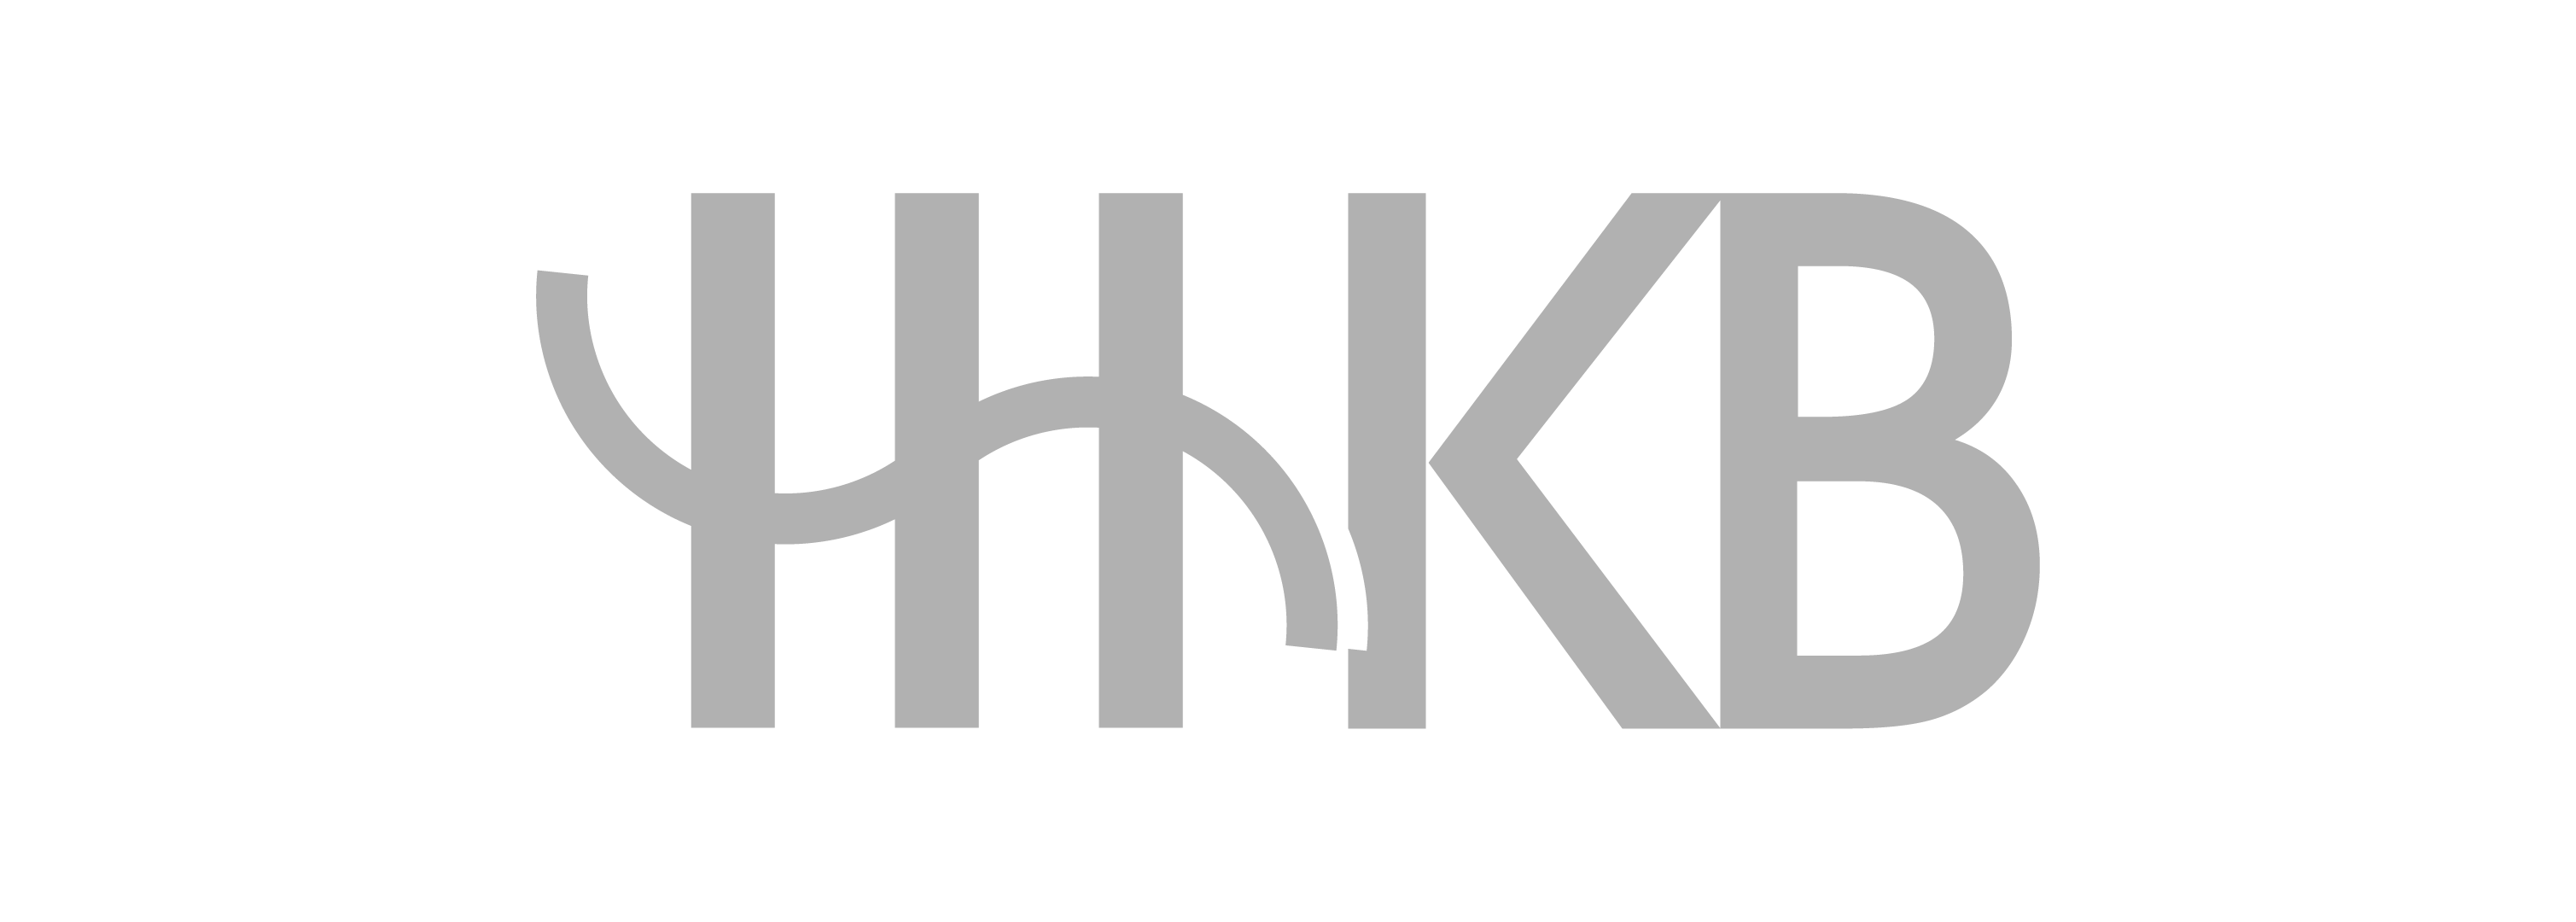 White background with gray HHKB logo